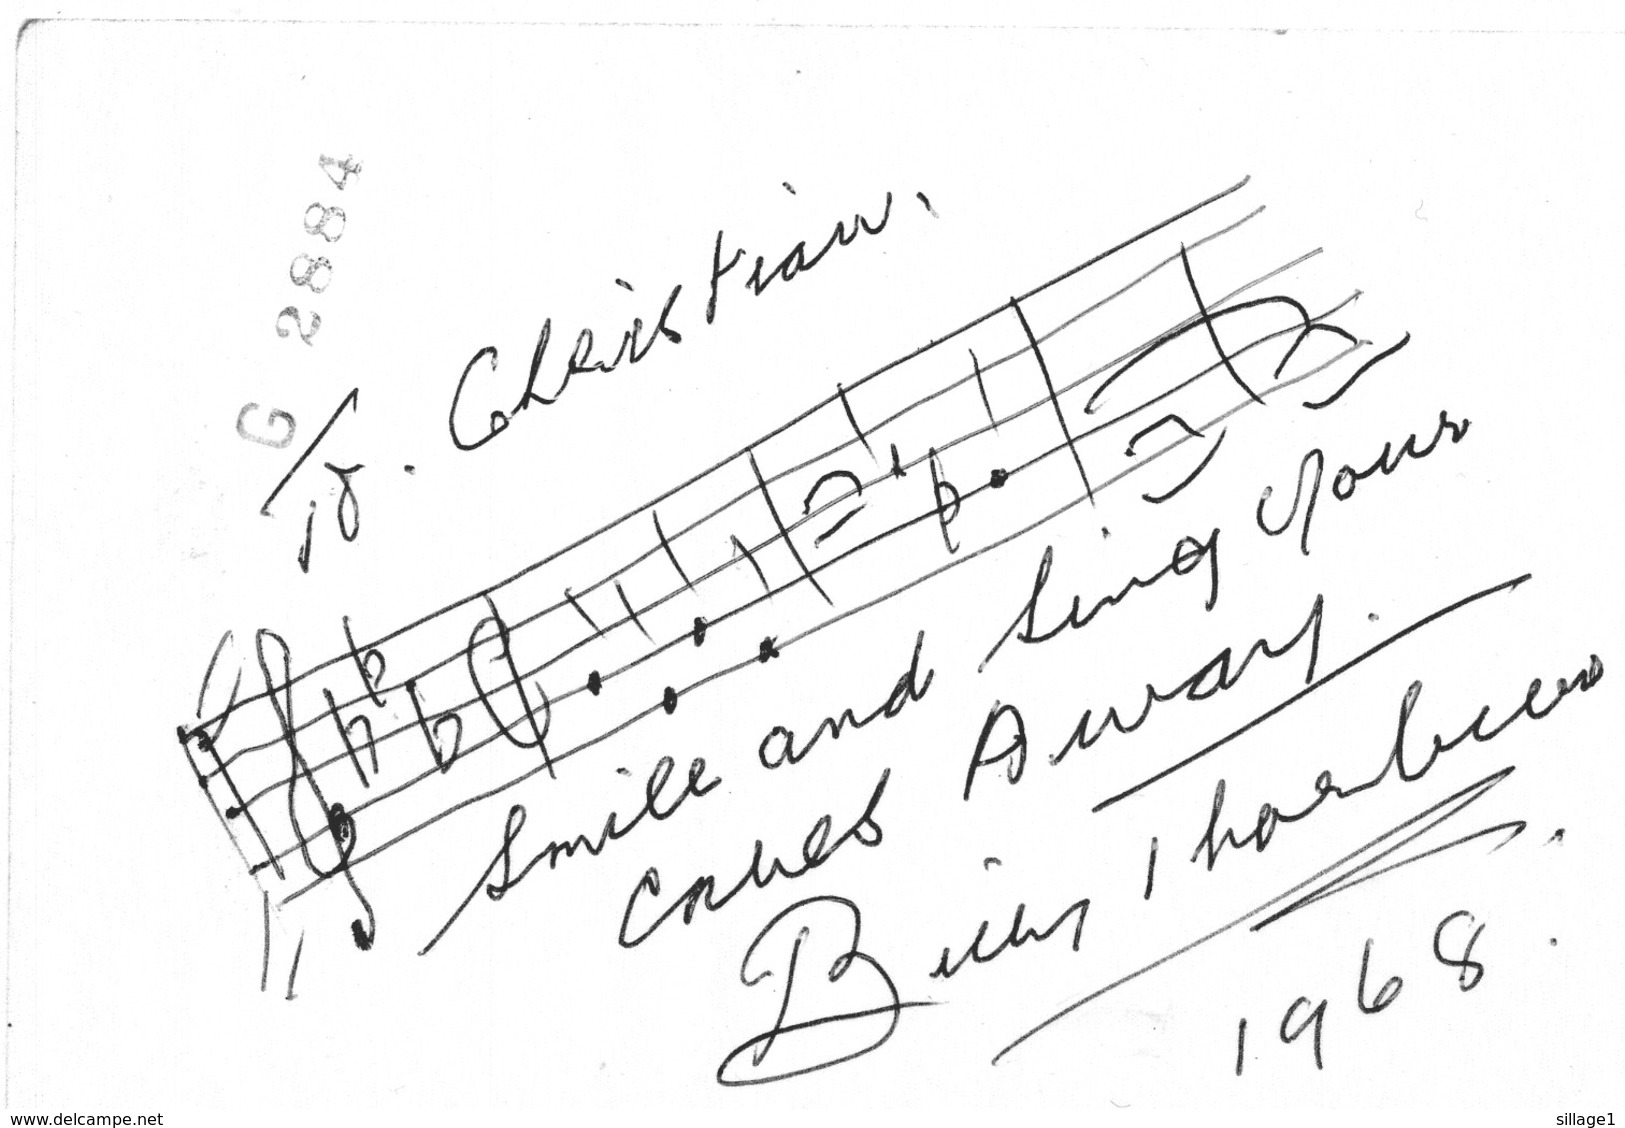 Carte Postale De 1968 The "Minx" Among The "Stars" Autographe De Billy Thorburn Pianiste - Autógrafos